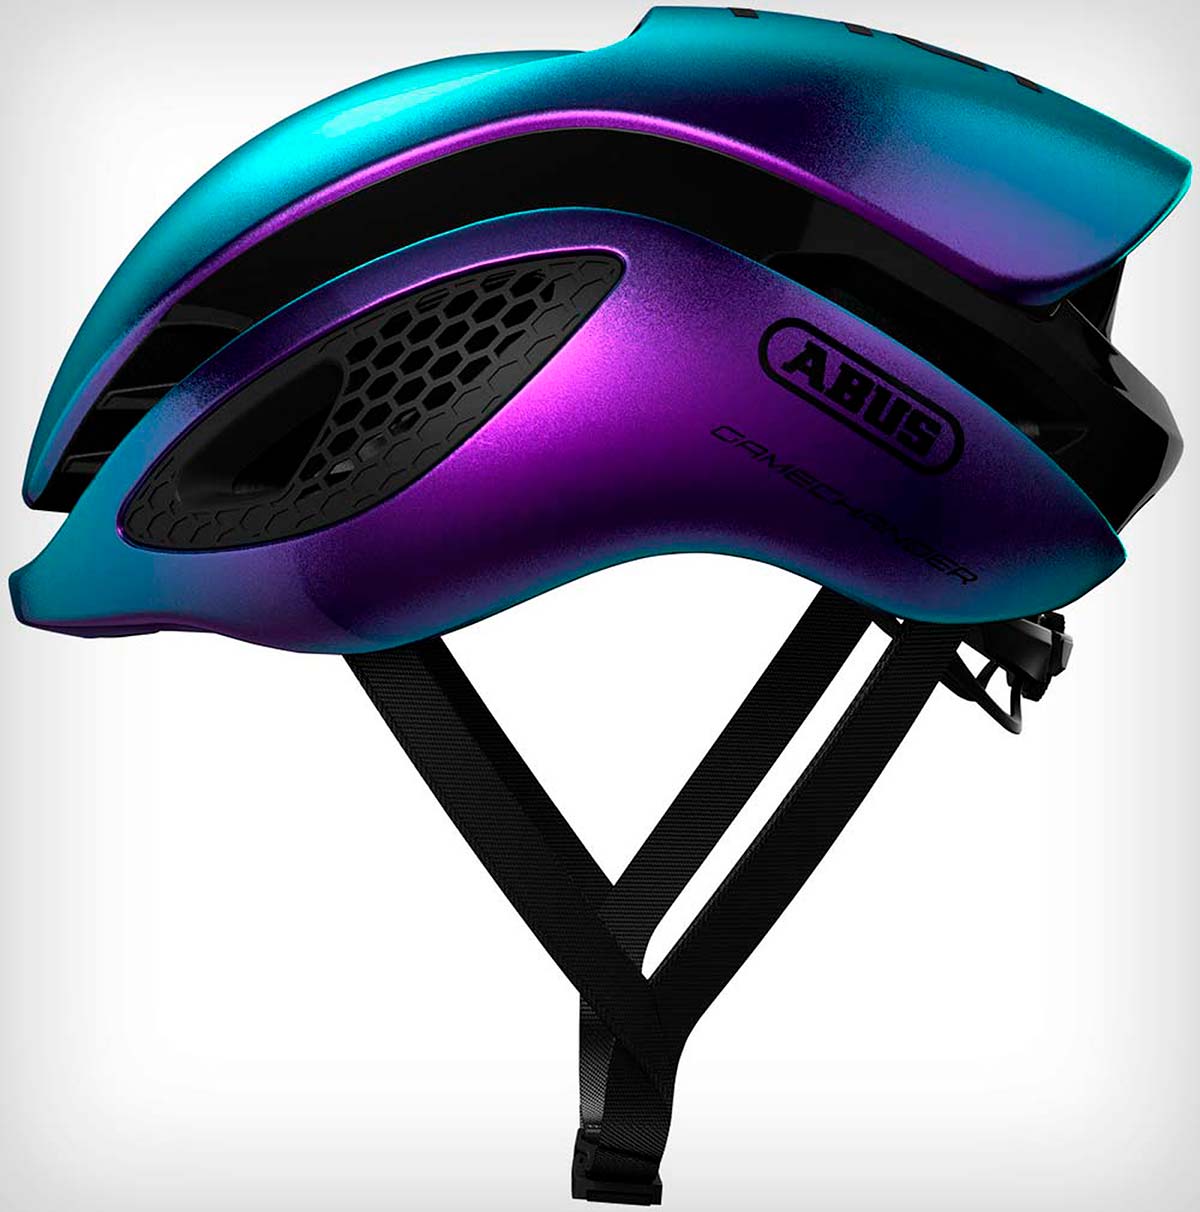 En TodoMountainBike: El casco ABUS GameChanger recibe dos exclusivos colores